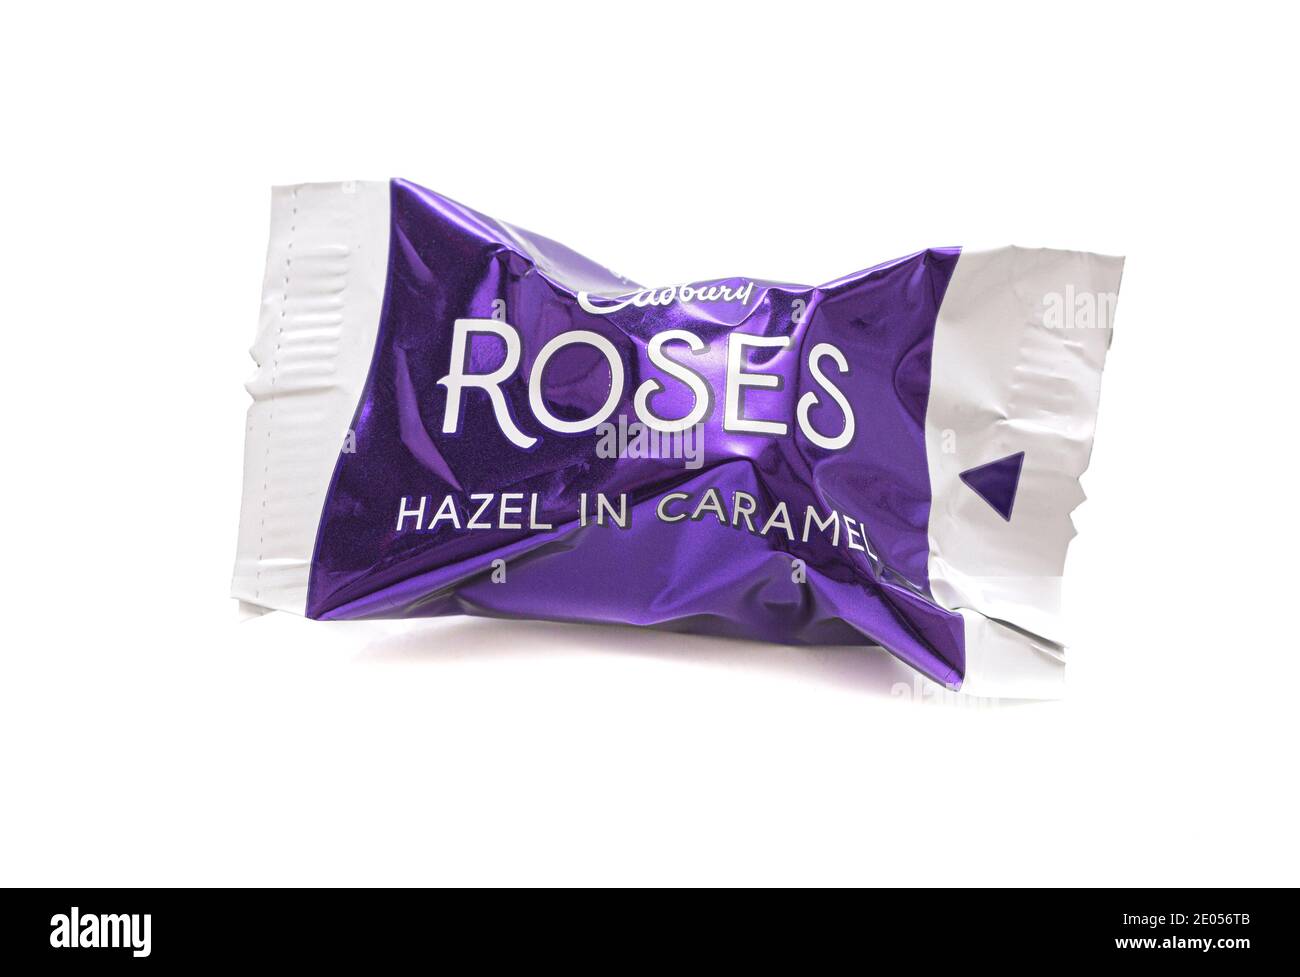 SWINDON, UK - 29 DICEMBRE 2020: Cadbury Roses Hazel in cioccolato al caramello su sfondo bianco. Foto Stock